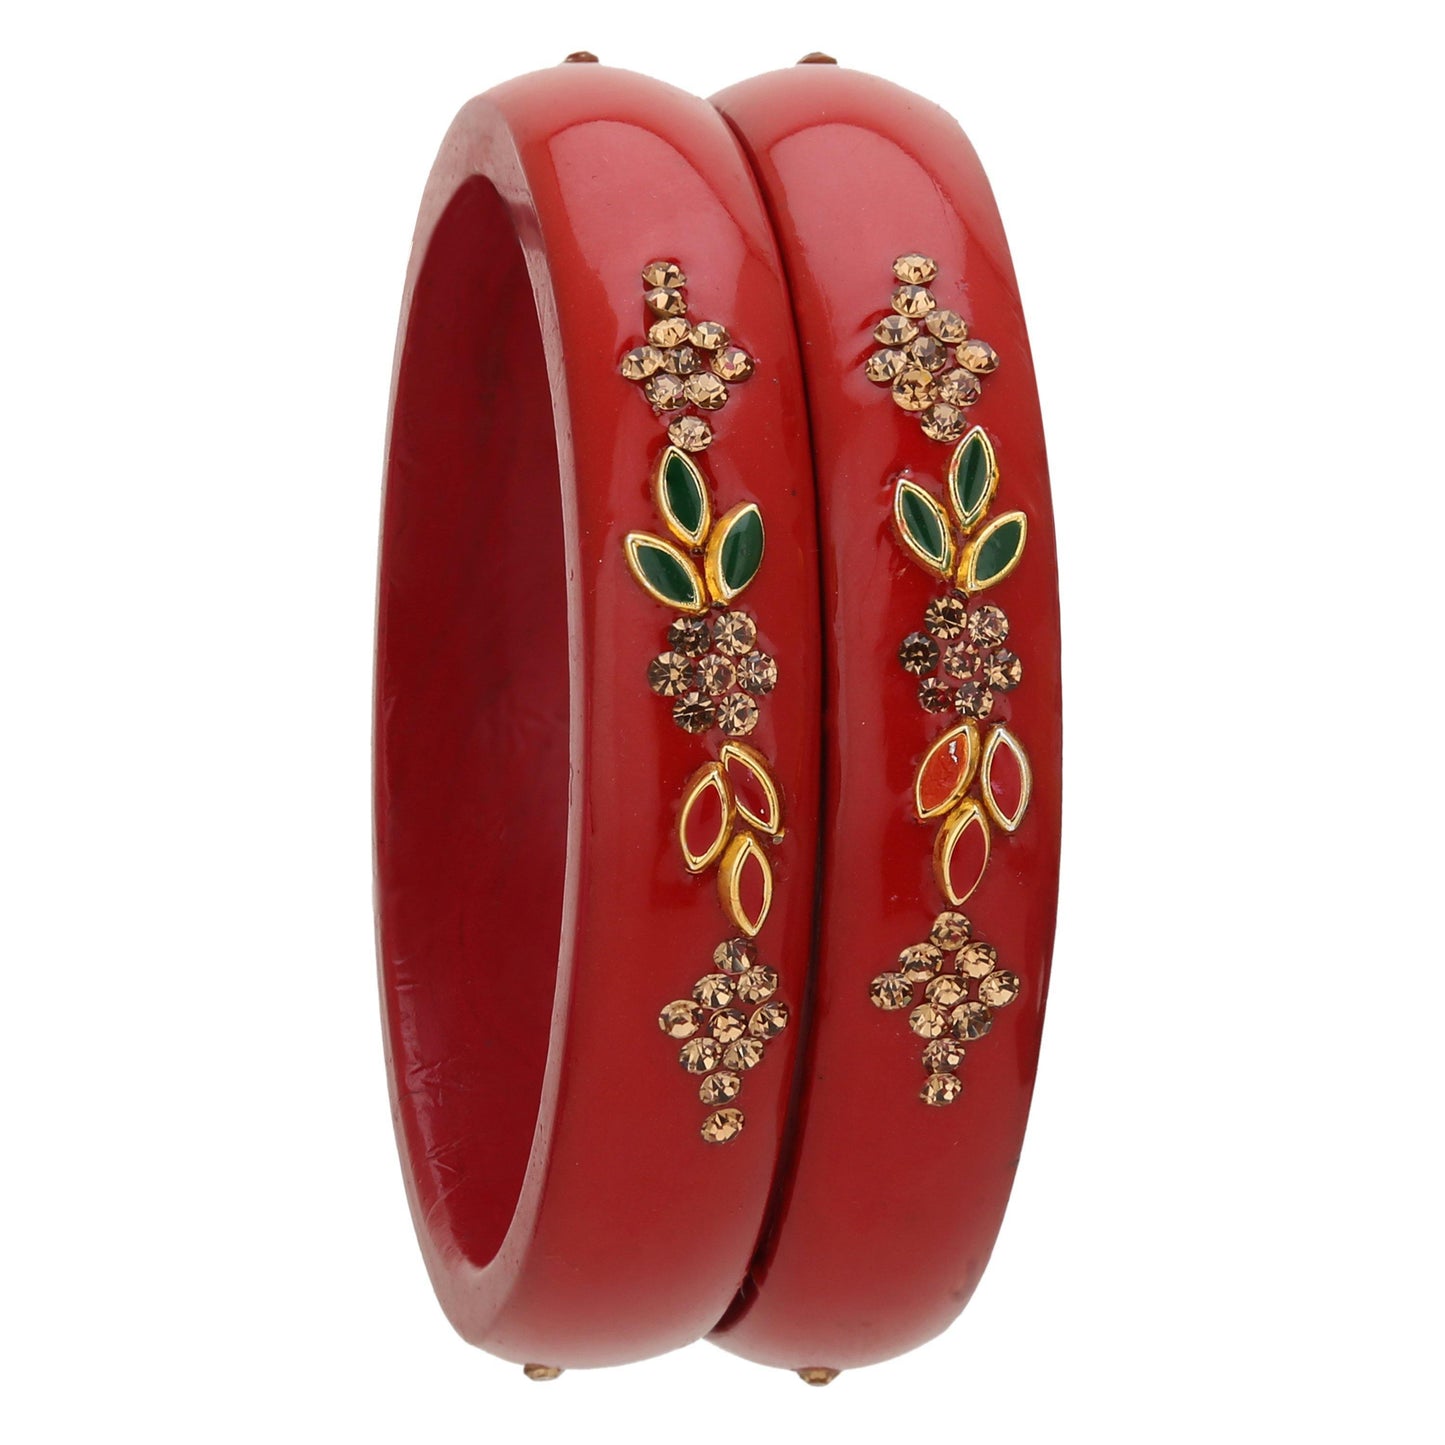 sukriti beautiful casual kundan red lac kada bangles for women – set of 2